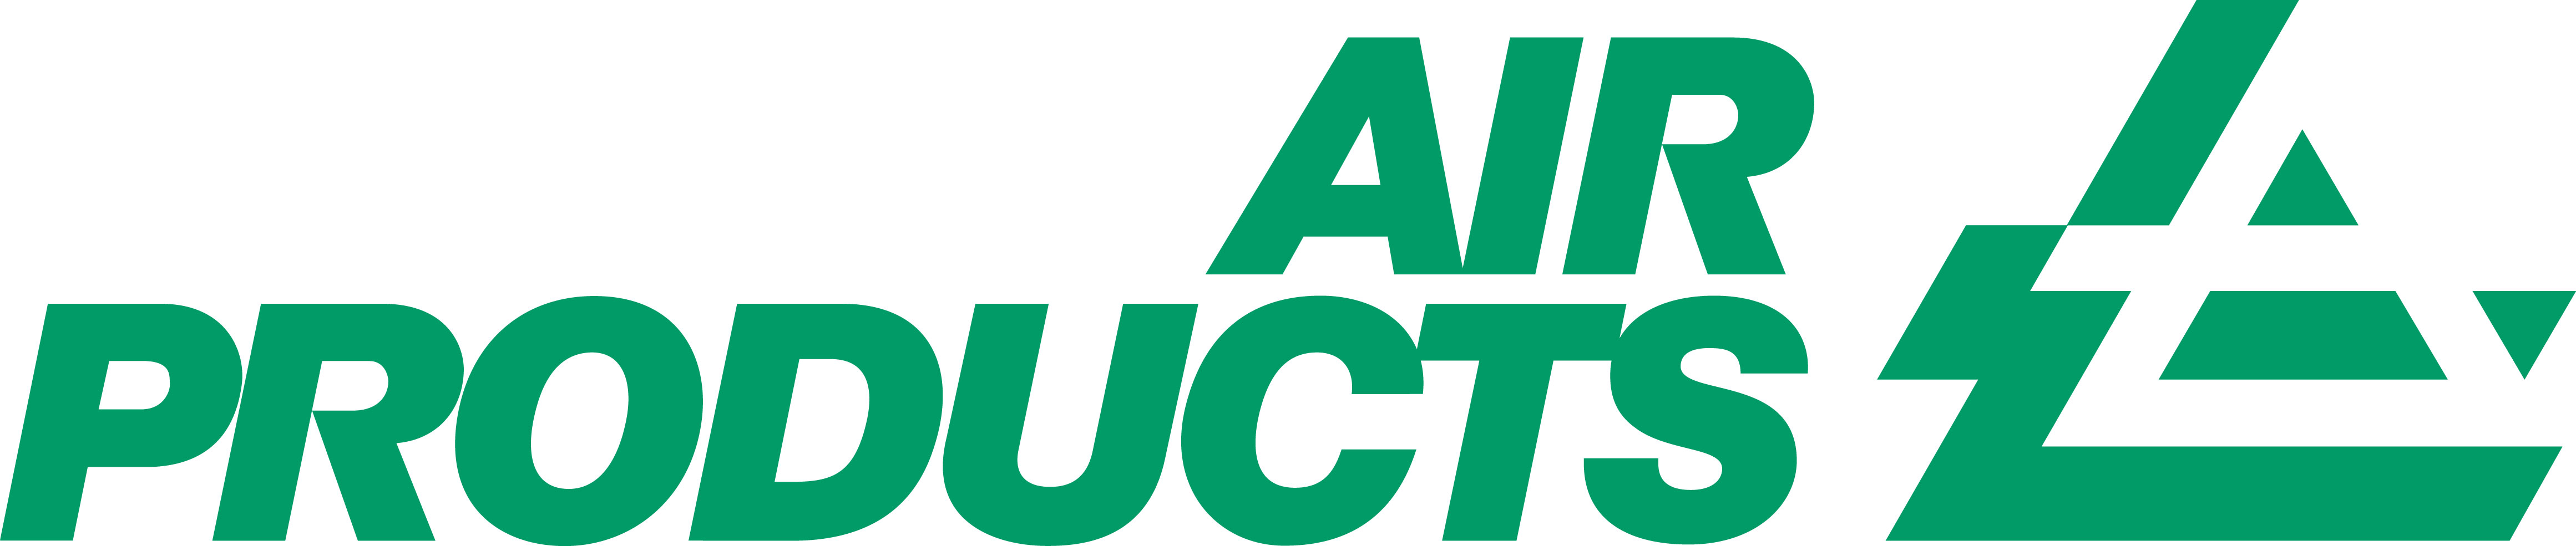 AirProducts-logo.jpg